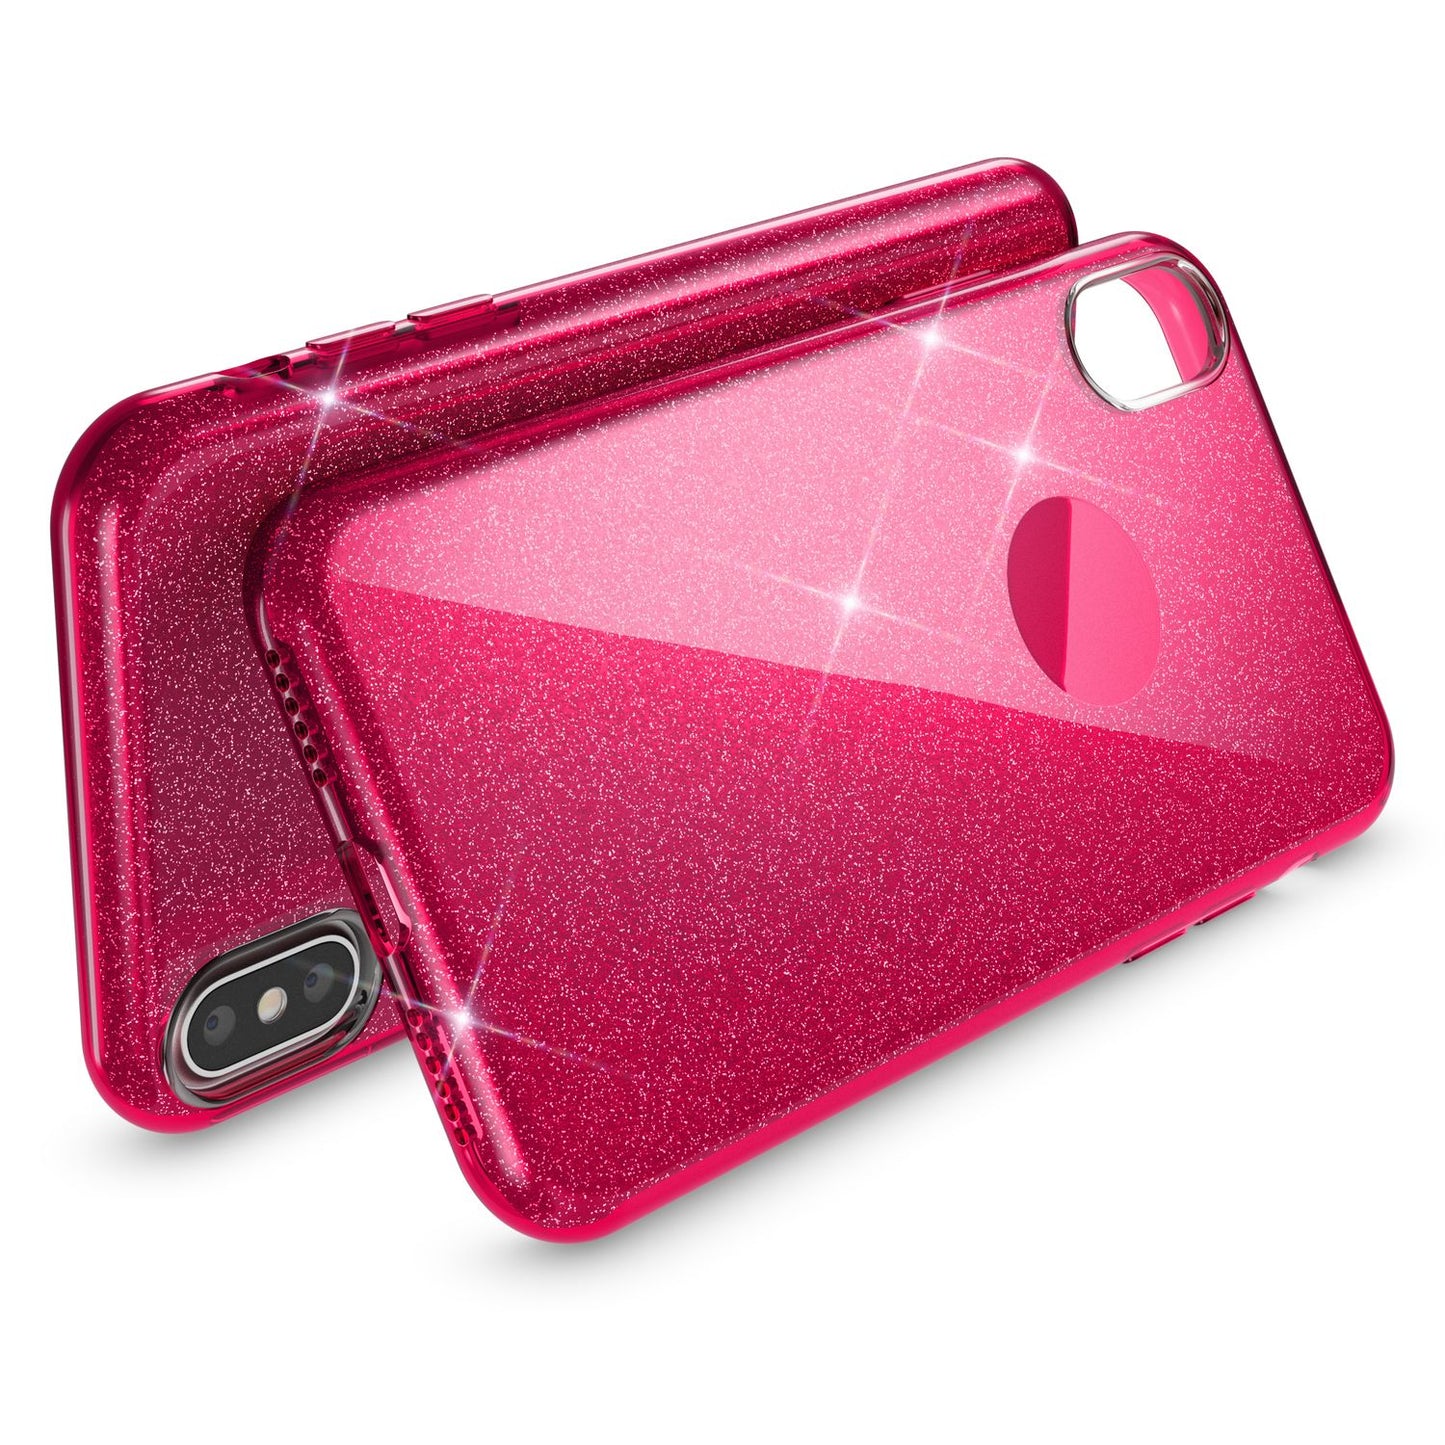 NALIA Hülle für iPhone XS Max, Handyhülle Glitzer Ultra Slim Silikon Case Cover